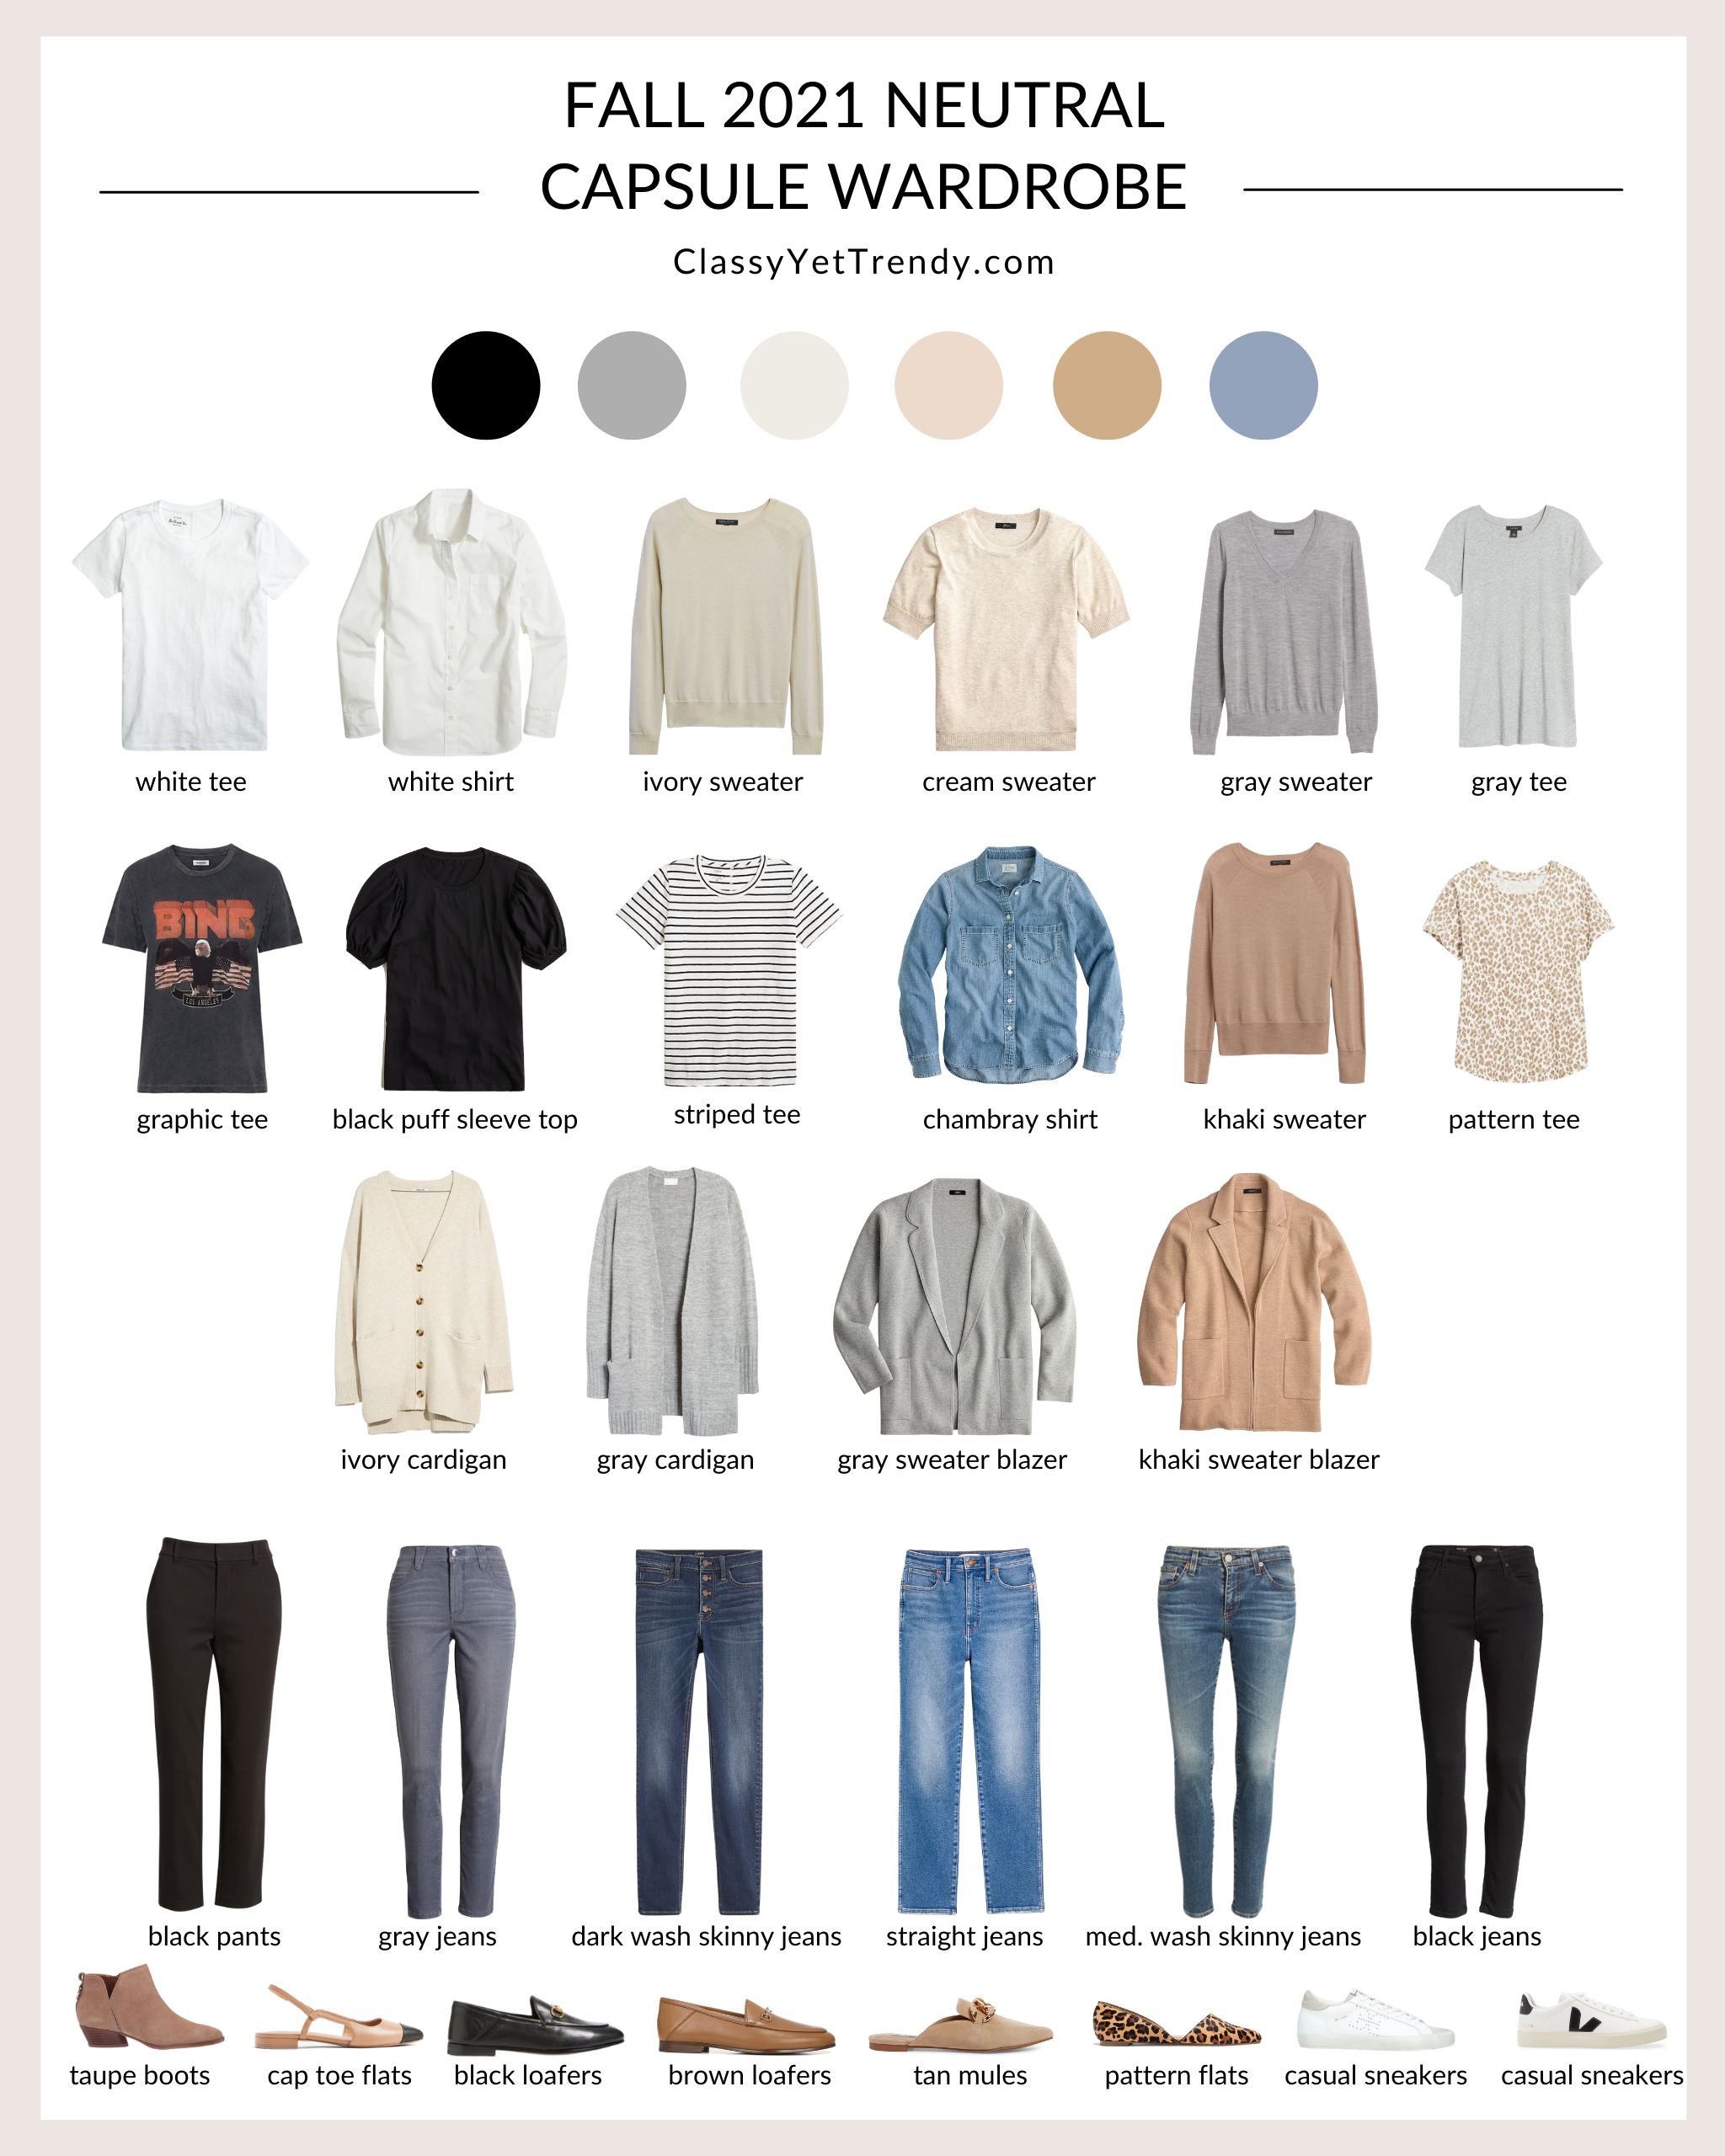 Fall Winter Capsule Wardrobe Checklist - Brunette from Wall Street